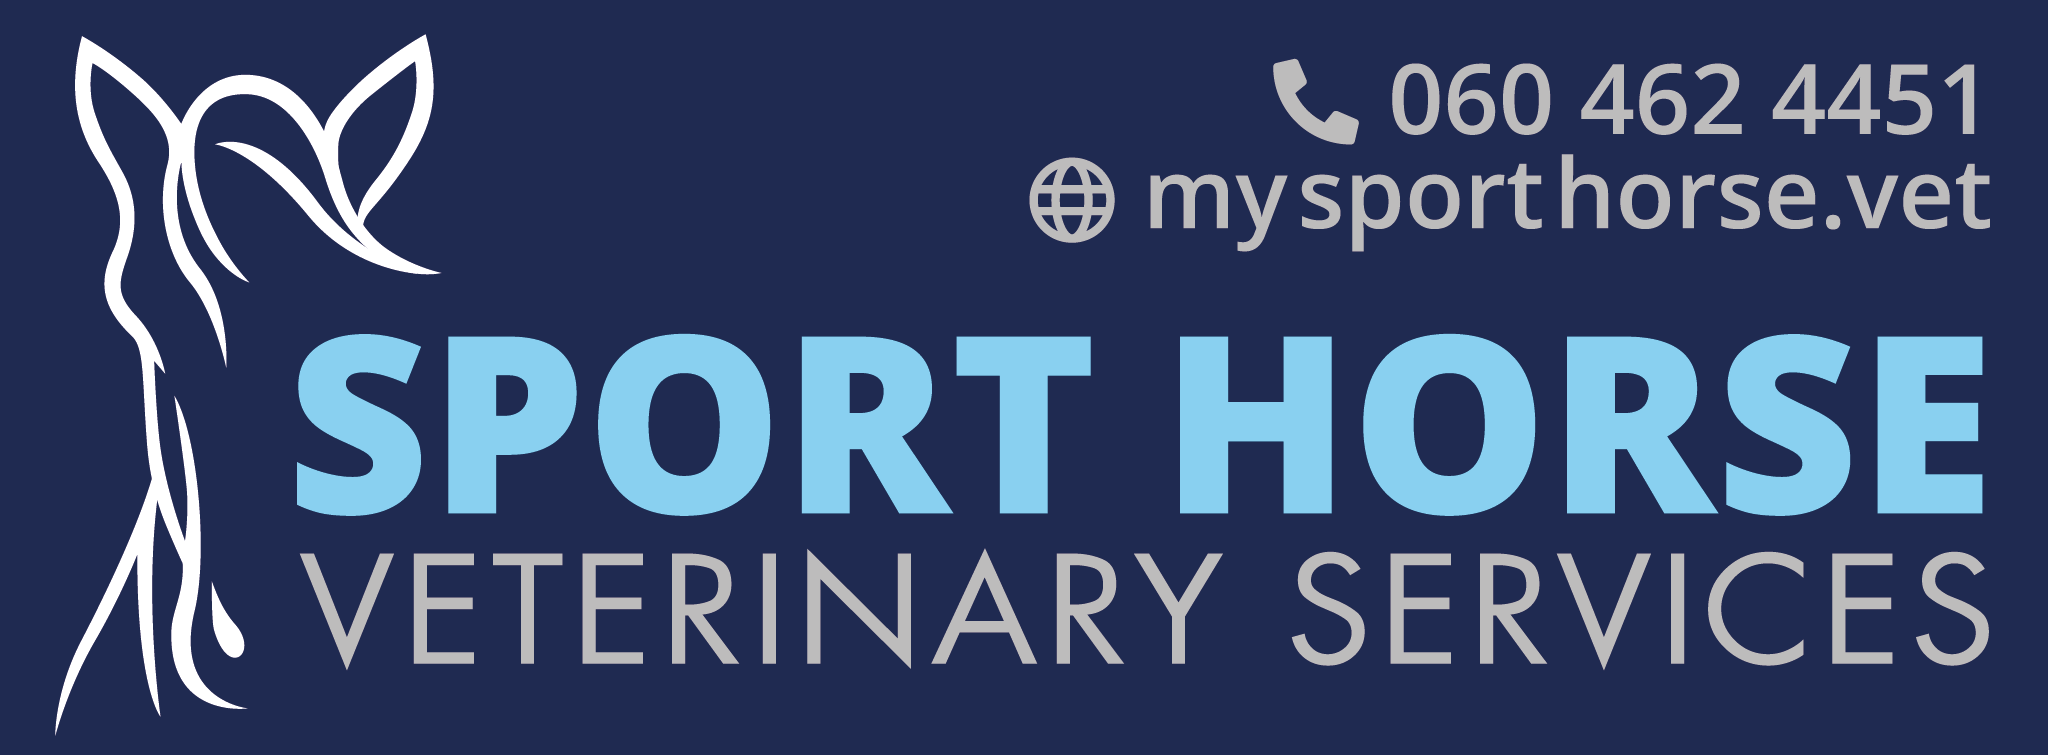 Sport Horse Veterinary Services Logo